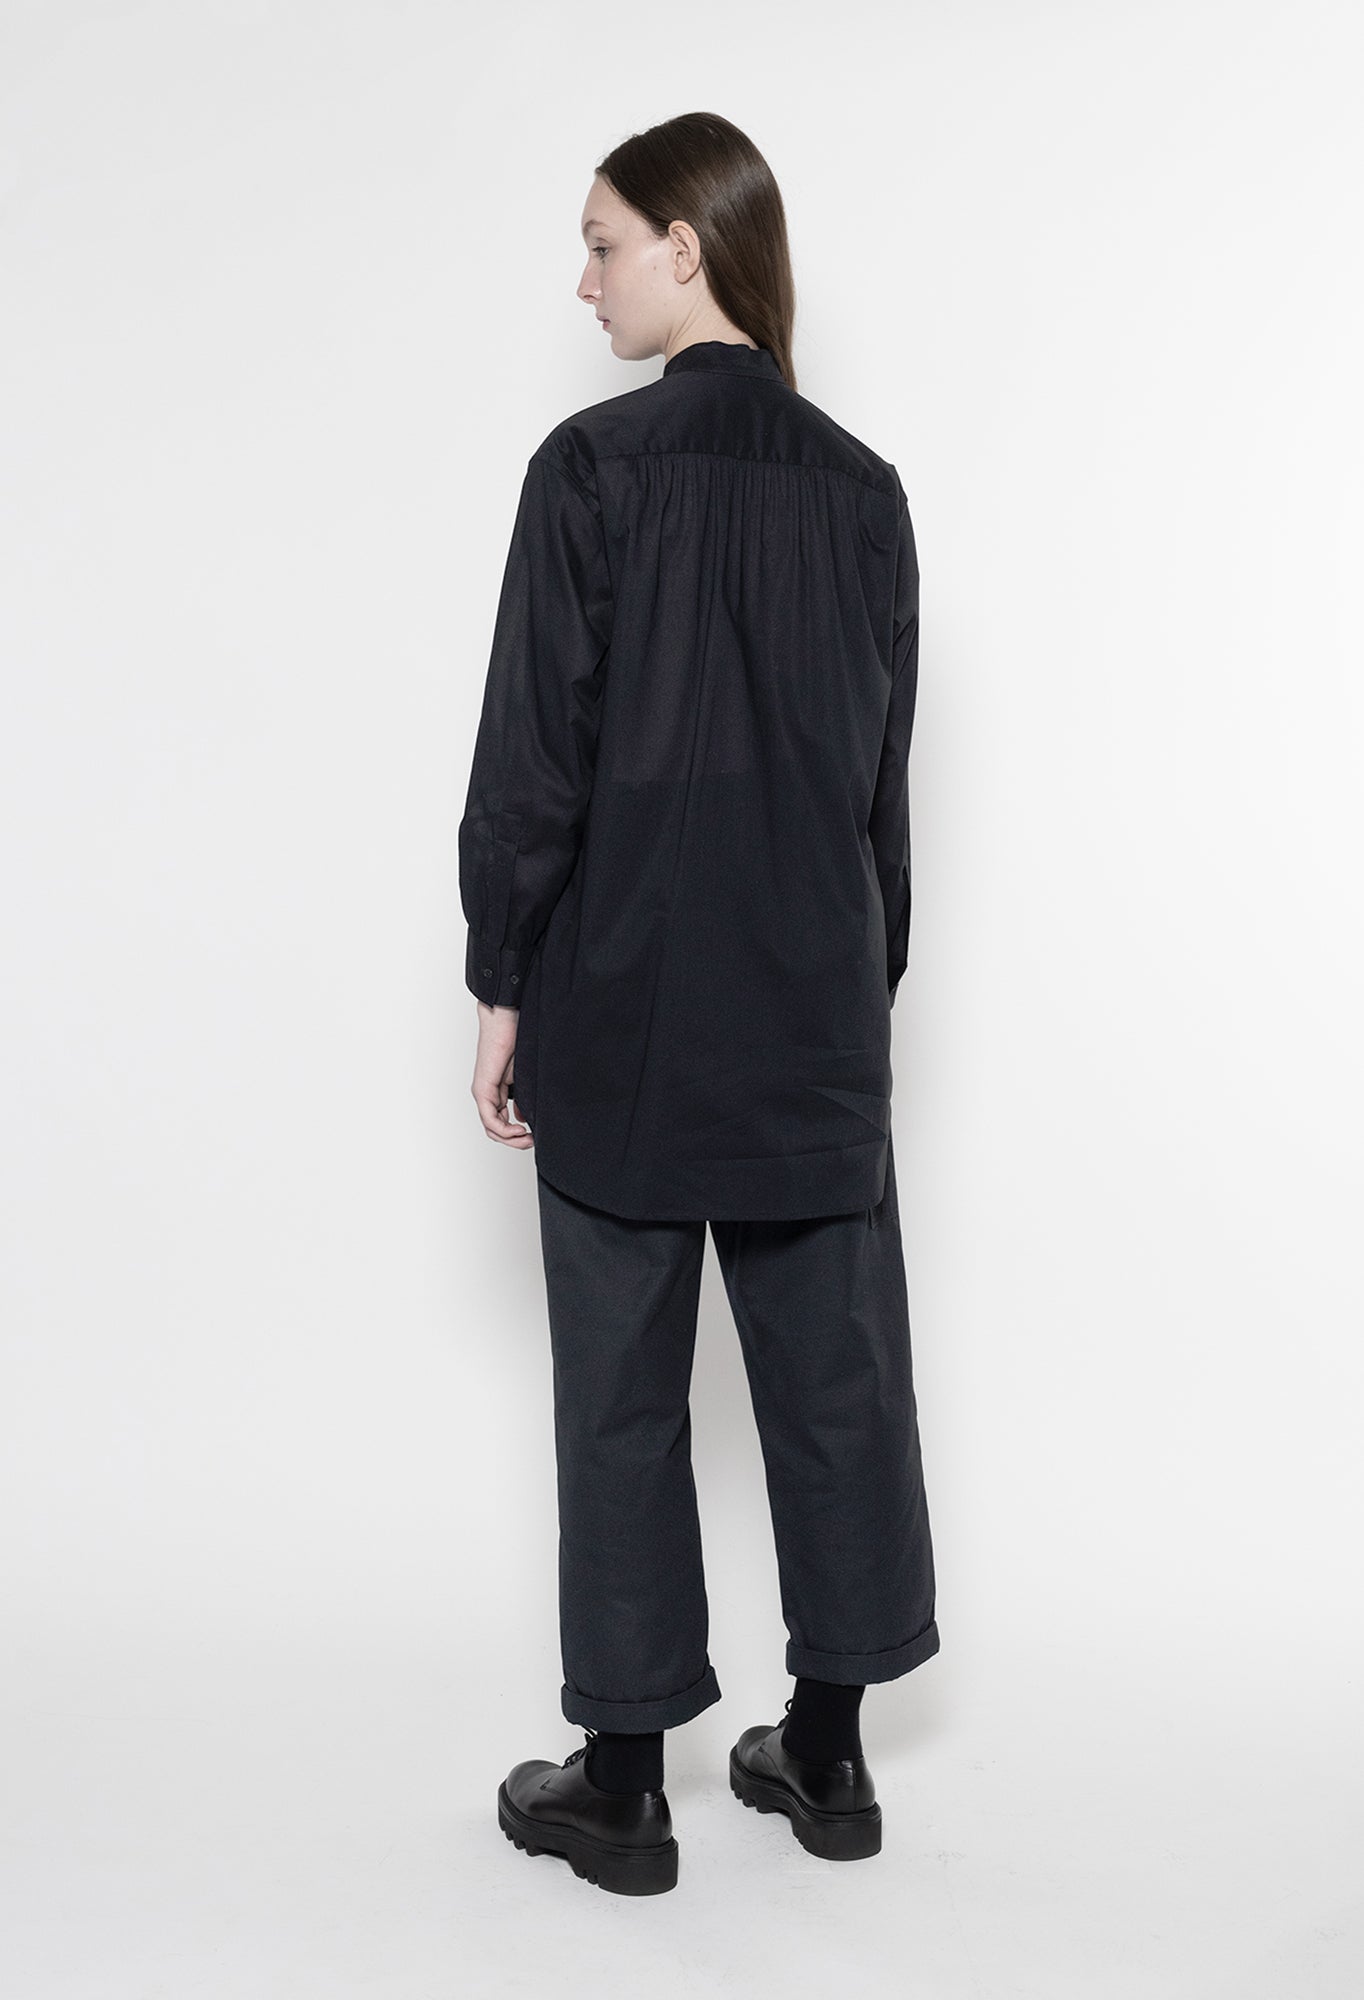 ZORAN - Stand Collar Long Sleeve Cotton Shirt in Black